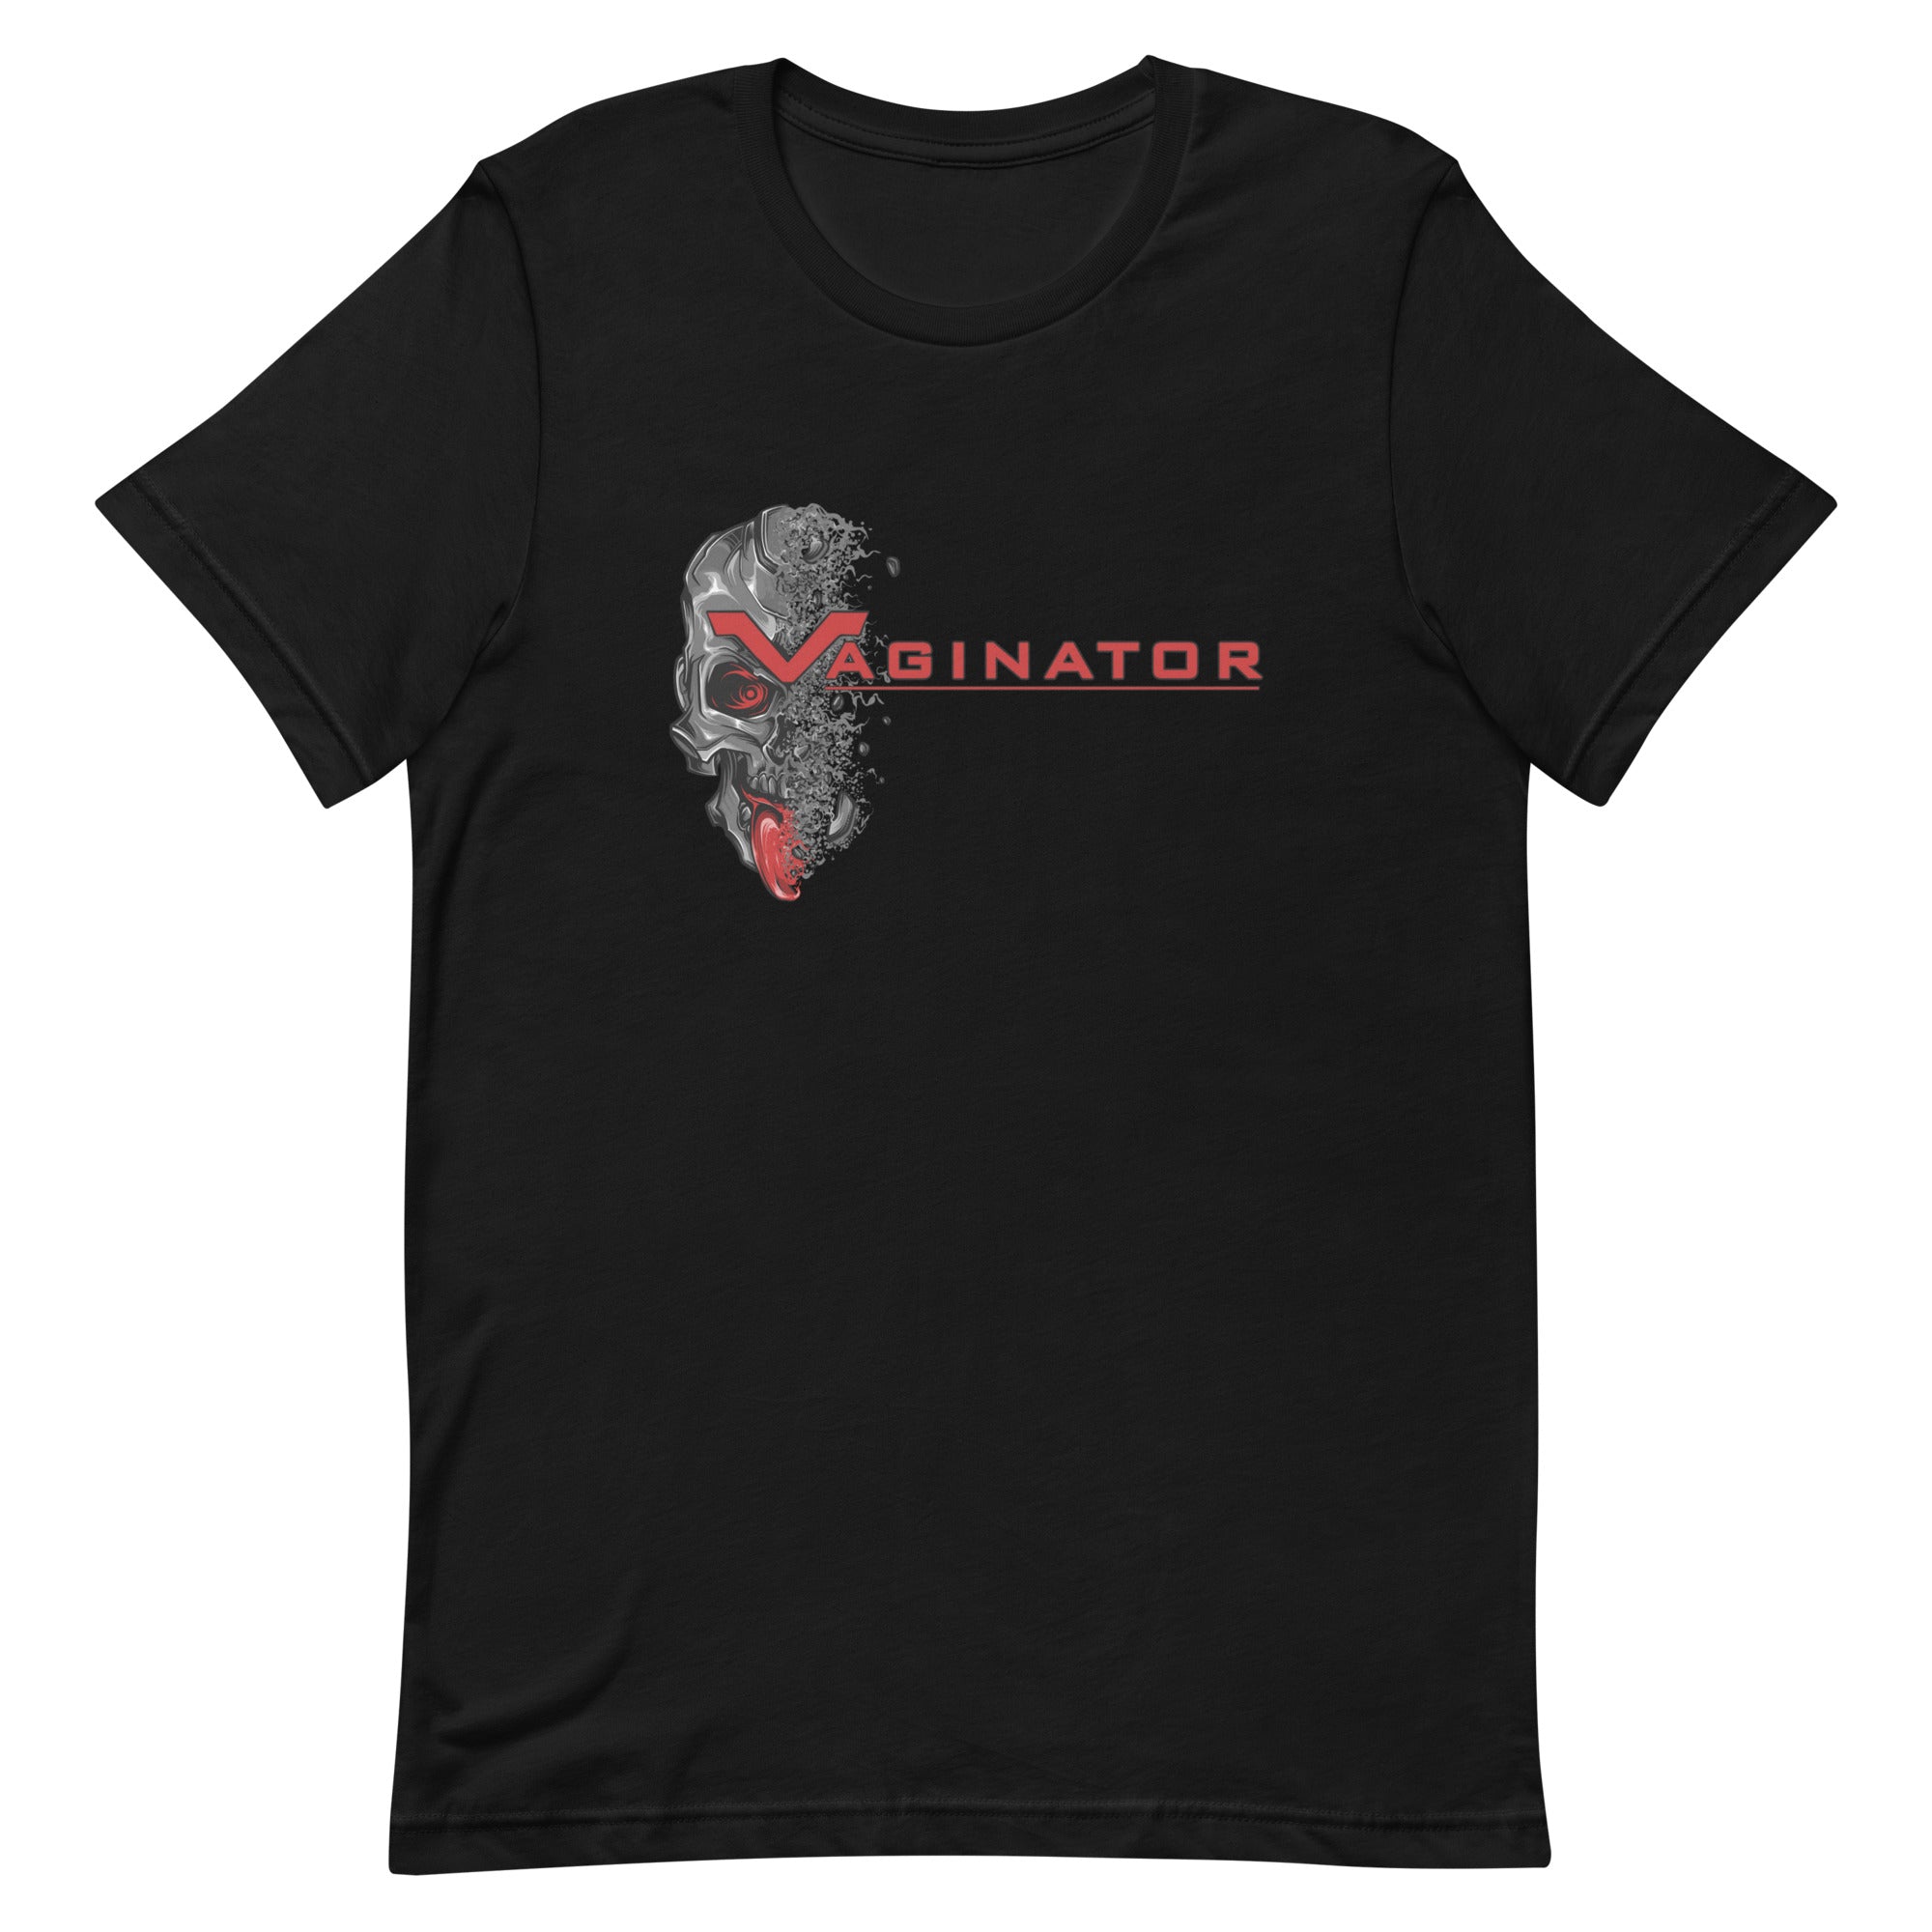 Vaginator T-Shirt